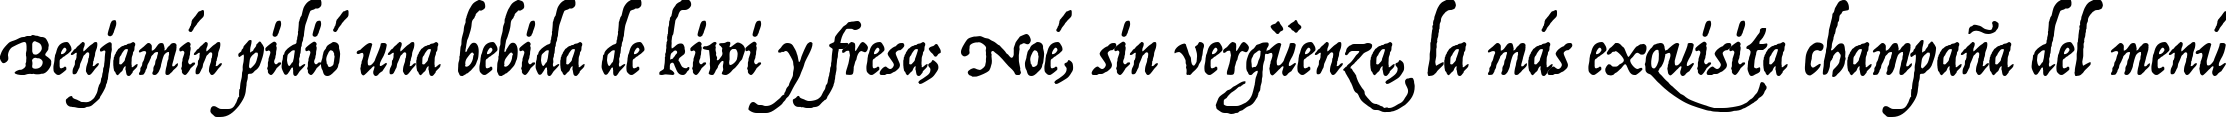 Пример написания шрифтом P22 Operina Corsivo текста на испанском